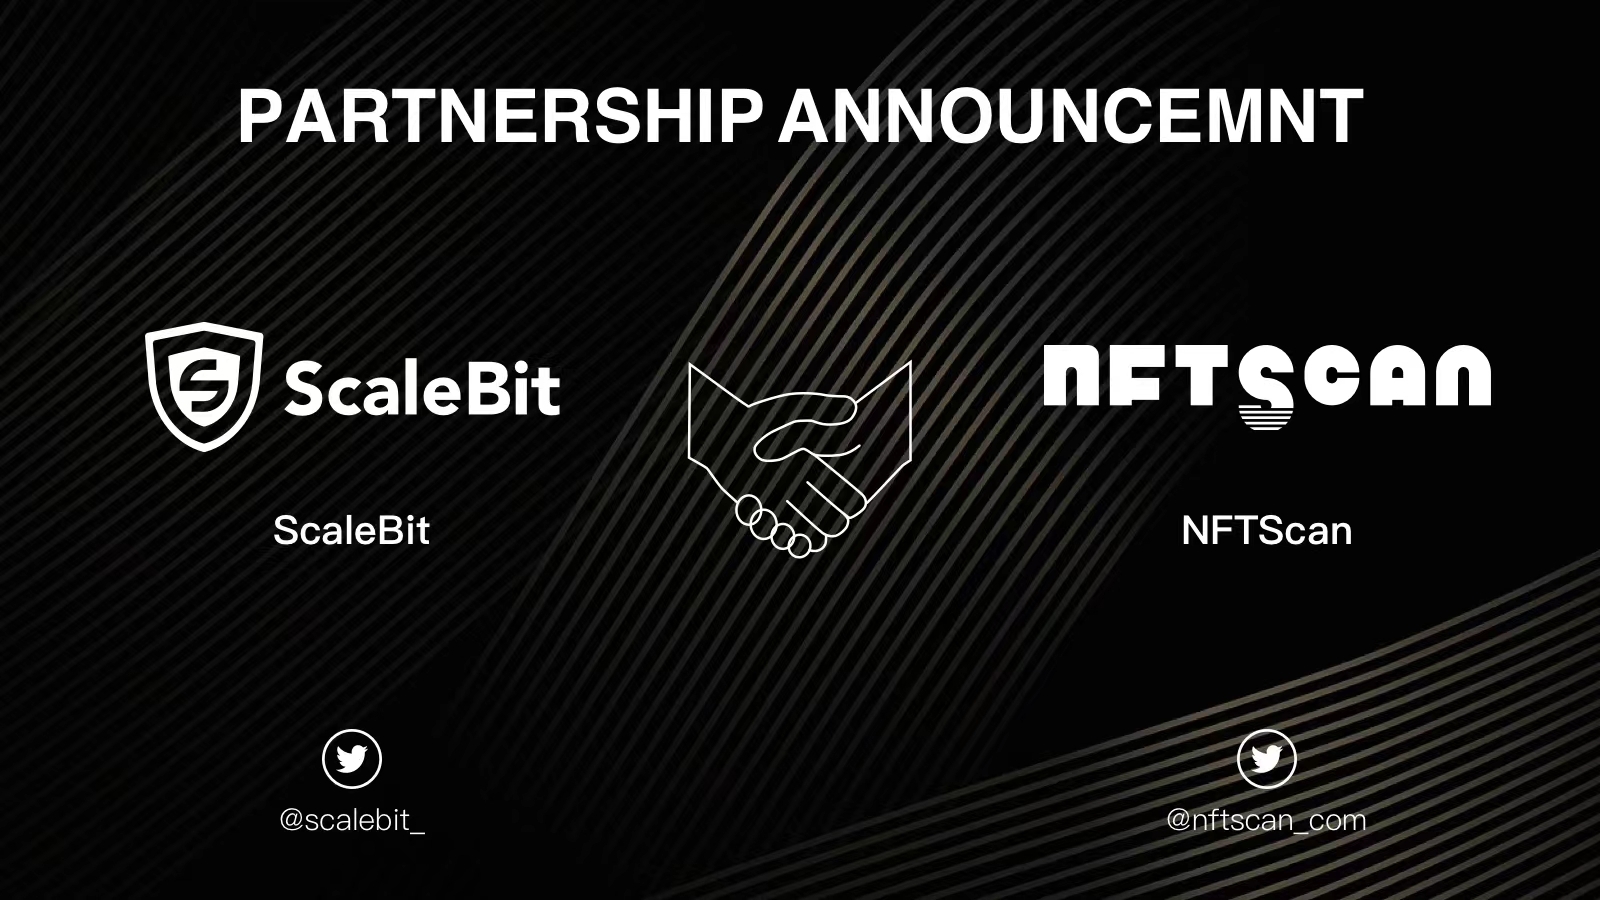 ScaleBit 与 NFTScan 达成安全生态合作伙伴关系